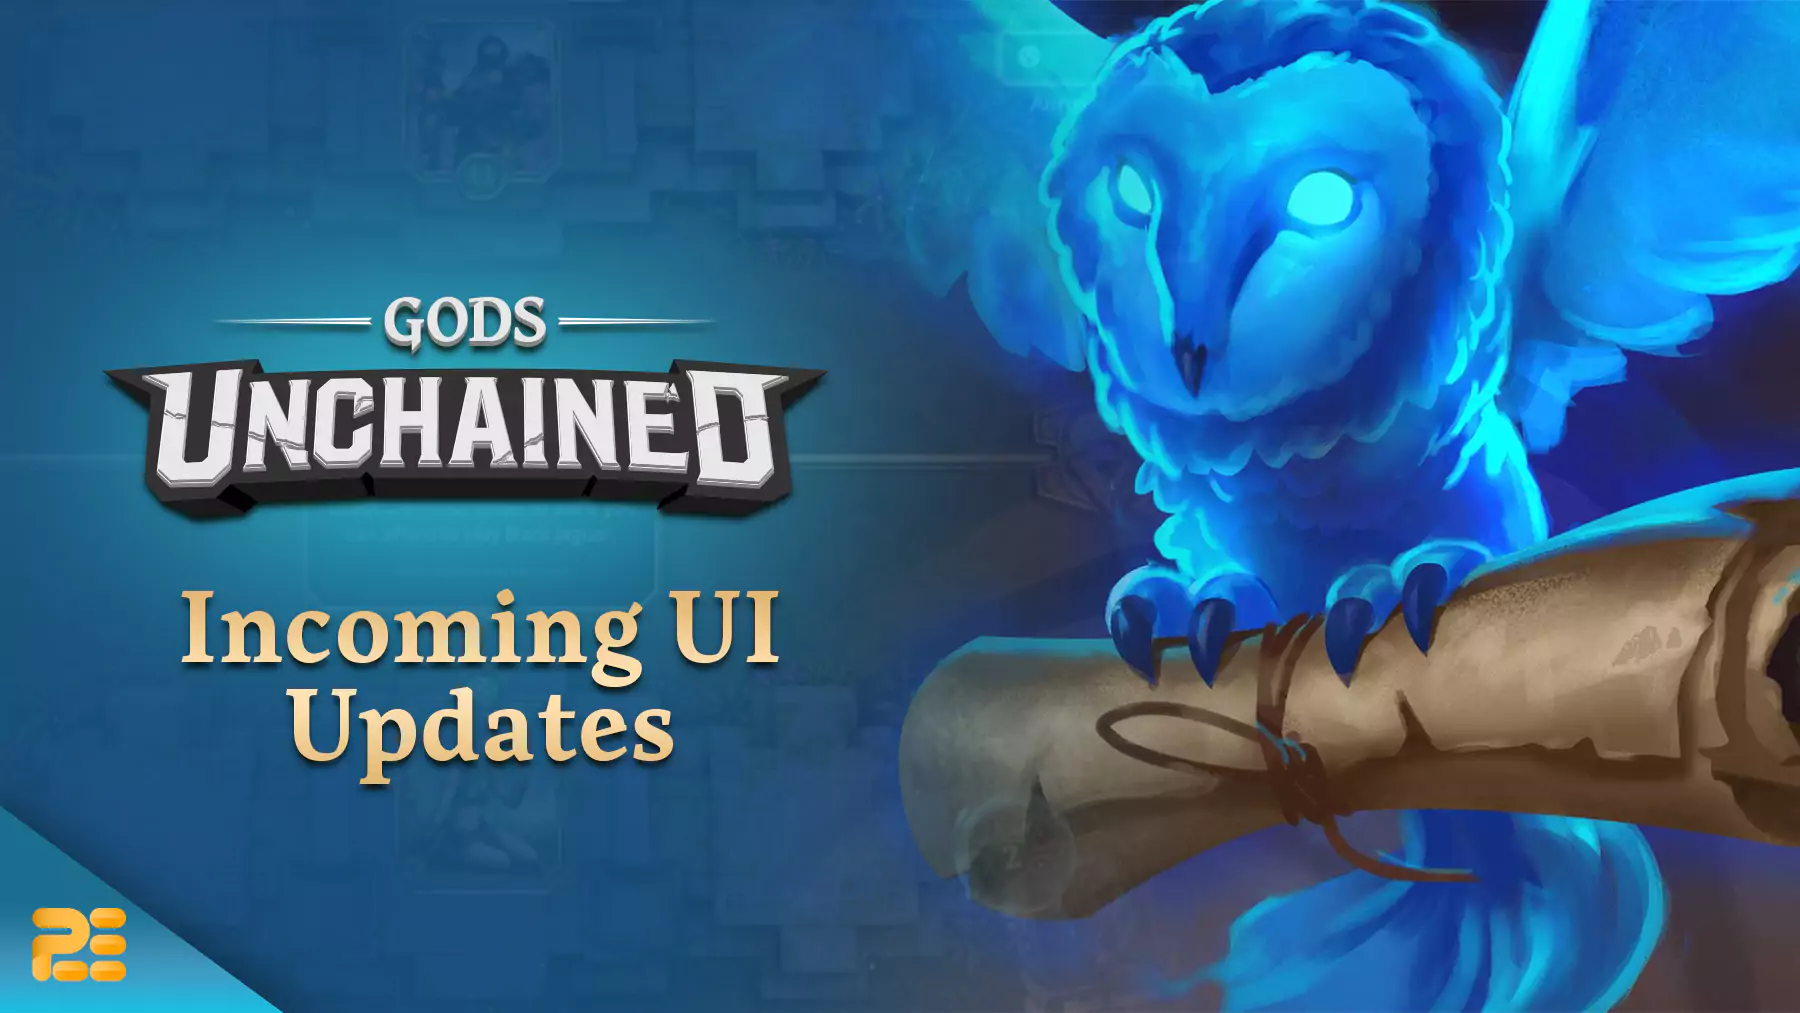 ui-actualizaciones-gods-unchained